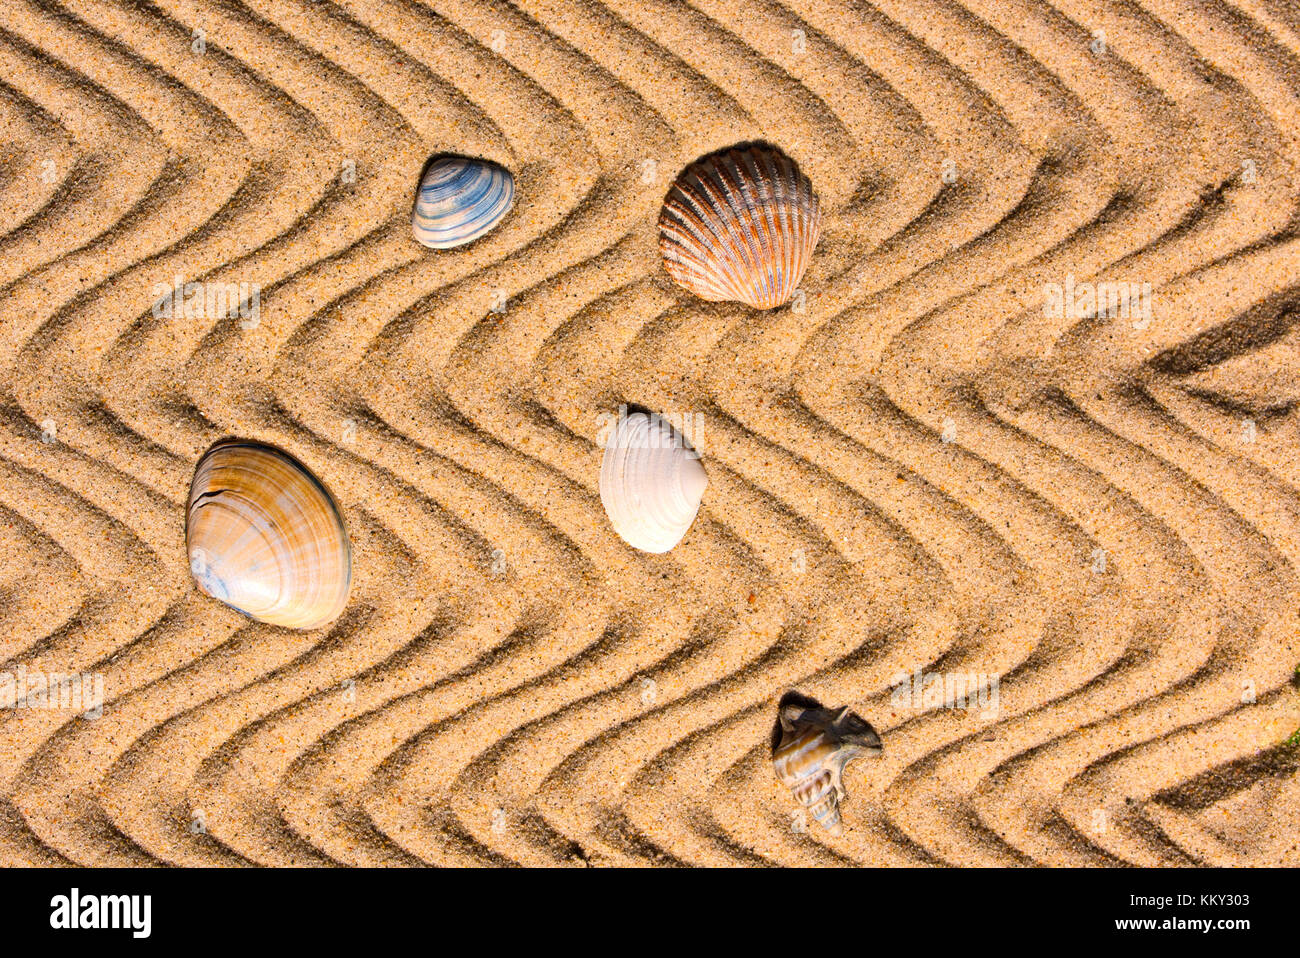 Conchas en la arena ondulada Foto de stock